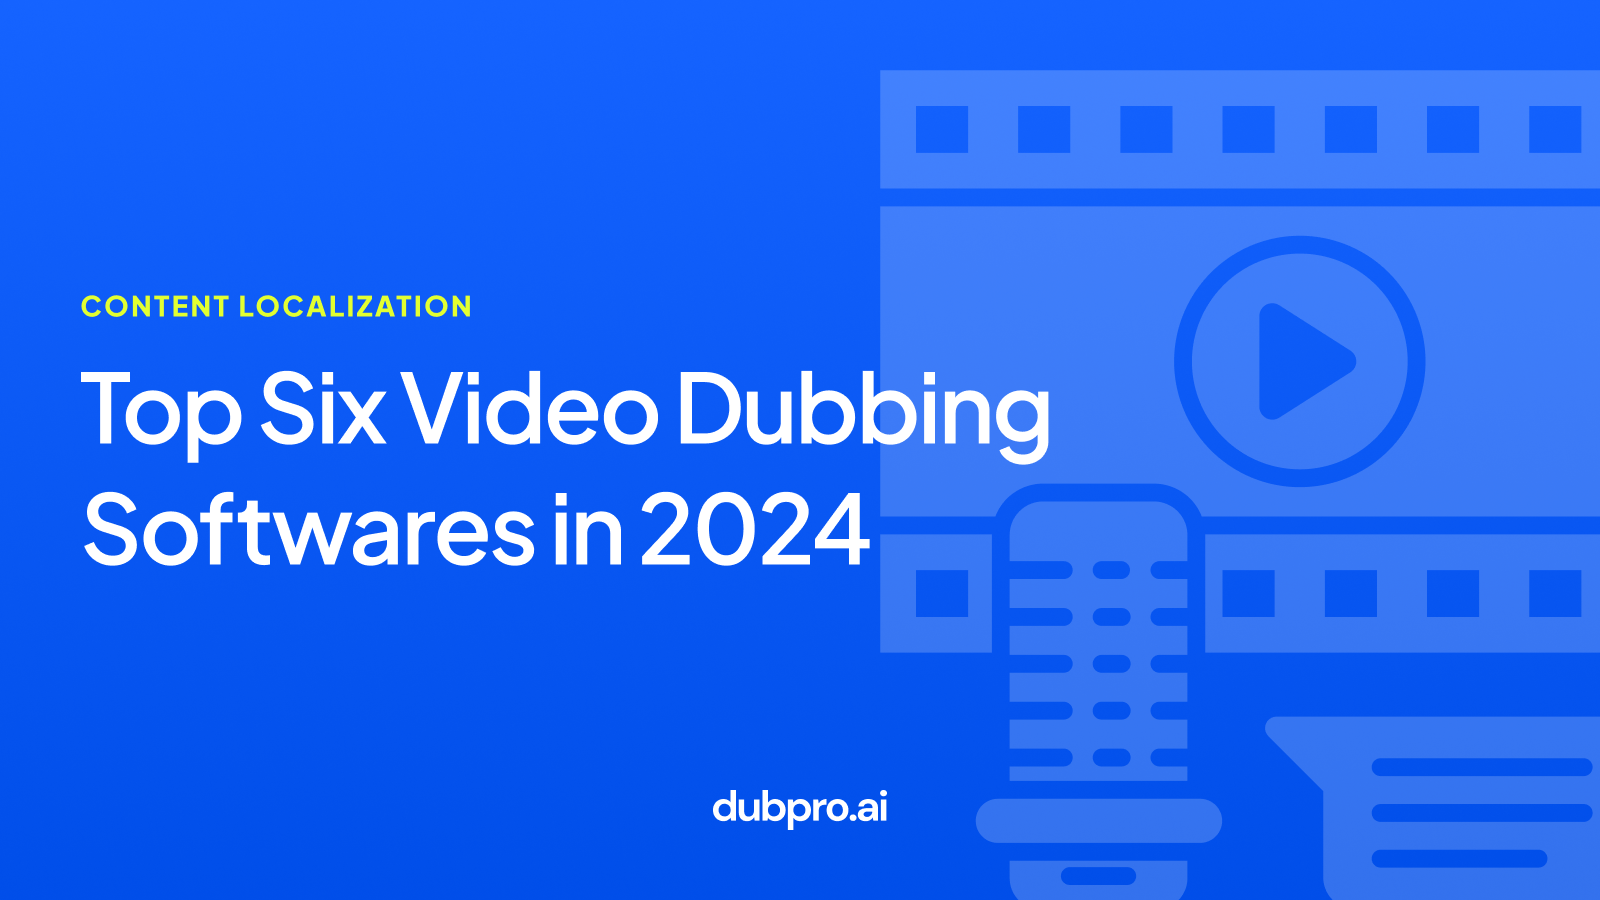 Top Six Video Dubbing Software in 2024